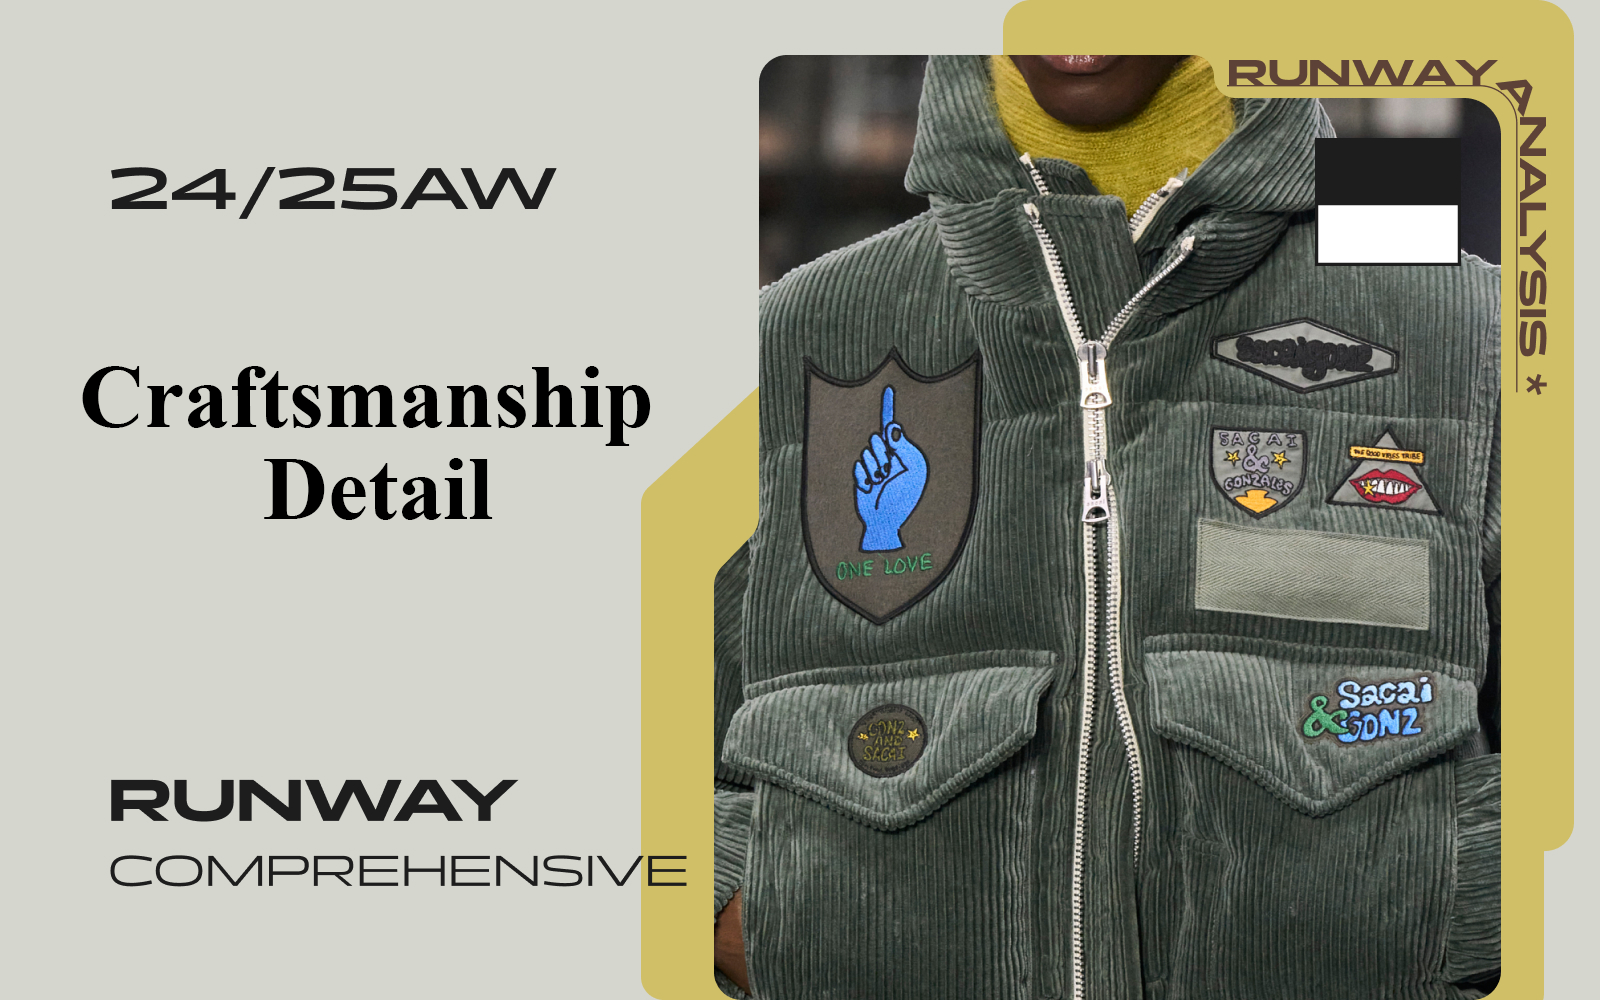 Craftsmanship Detail -- The Comprehensive Analysis of Menswear Runway